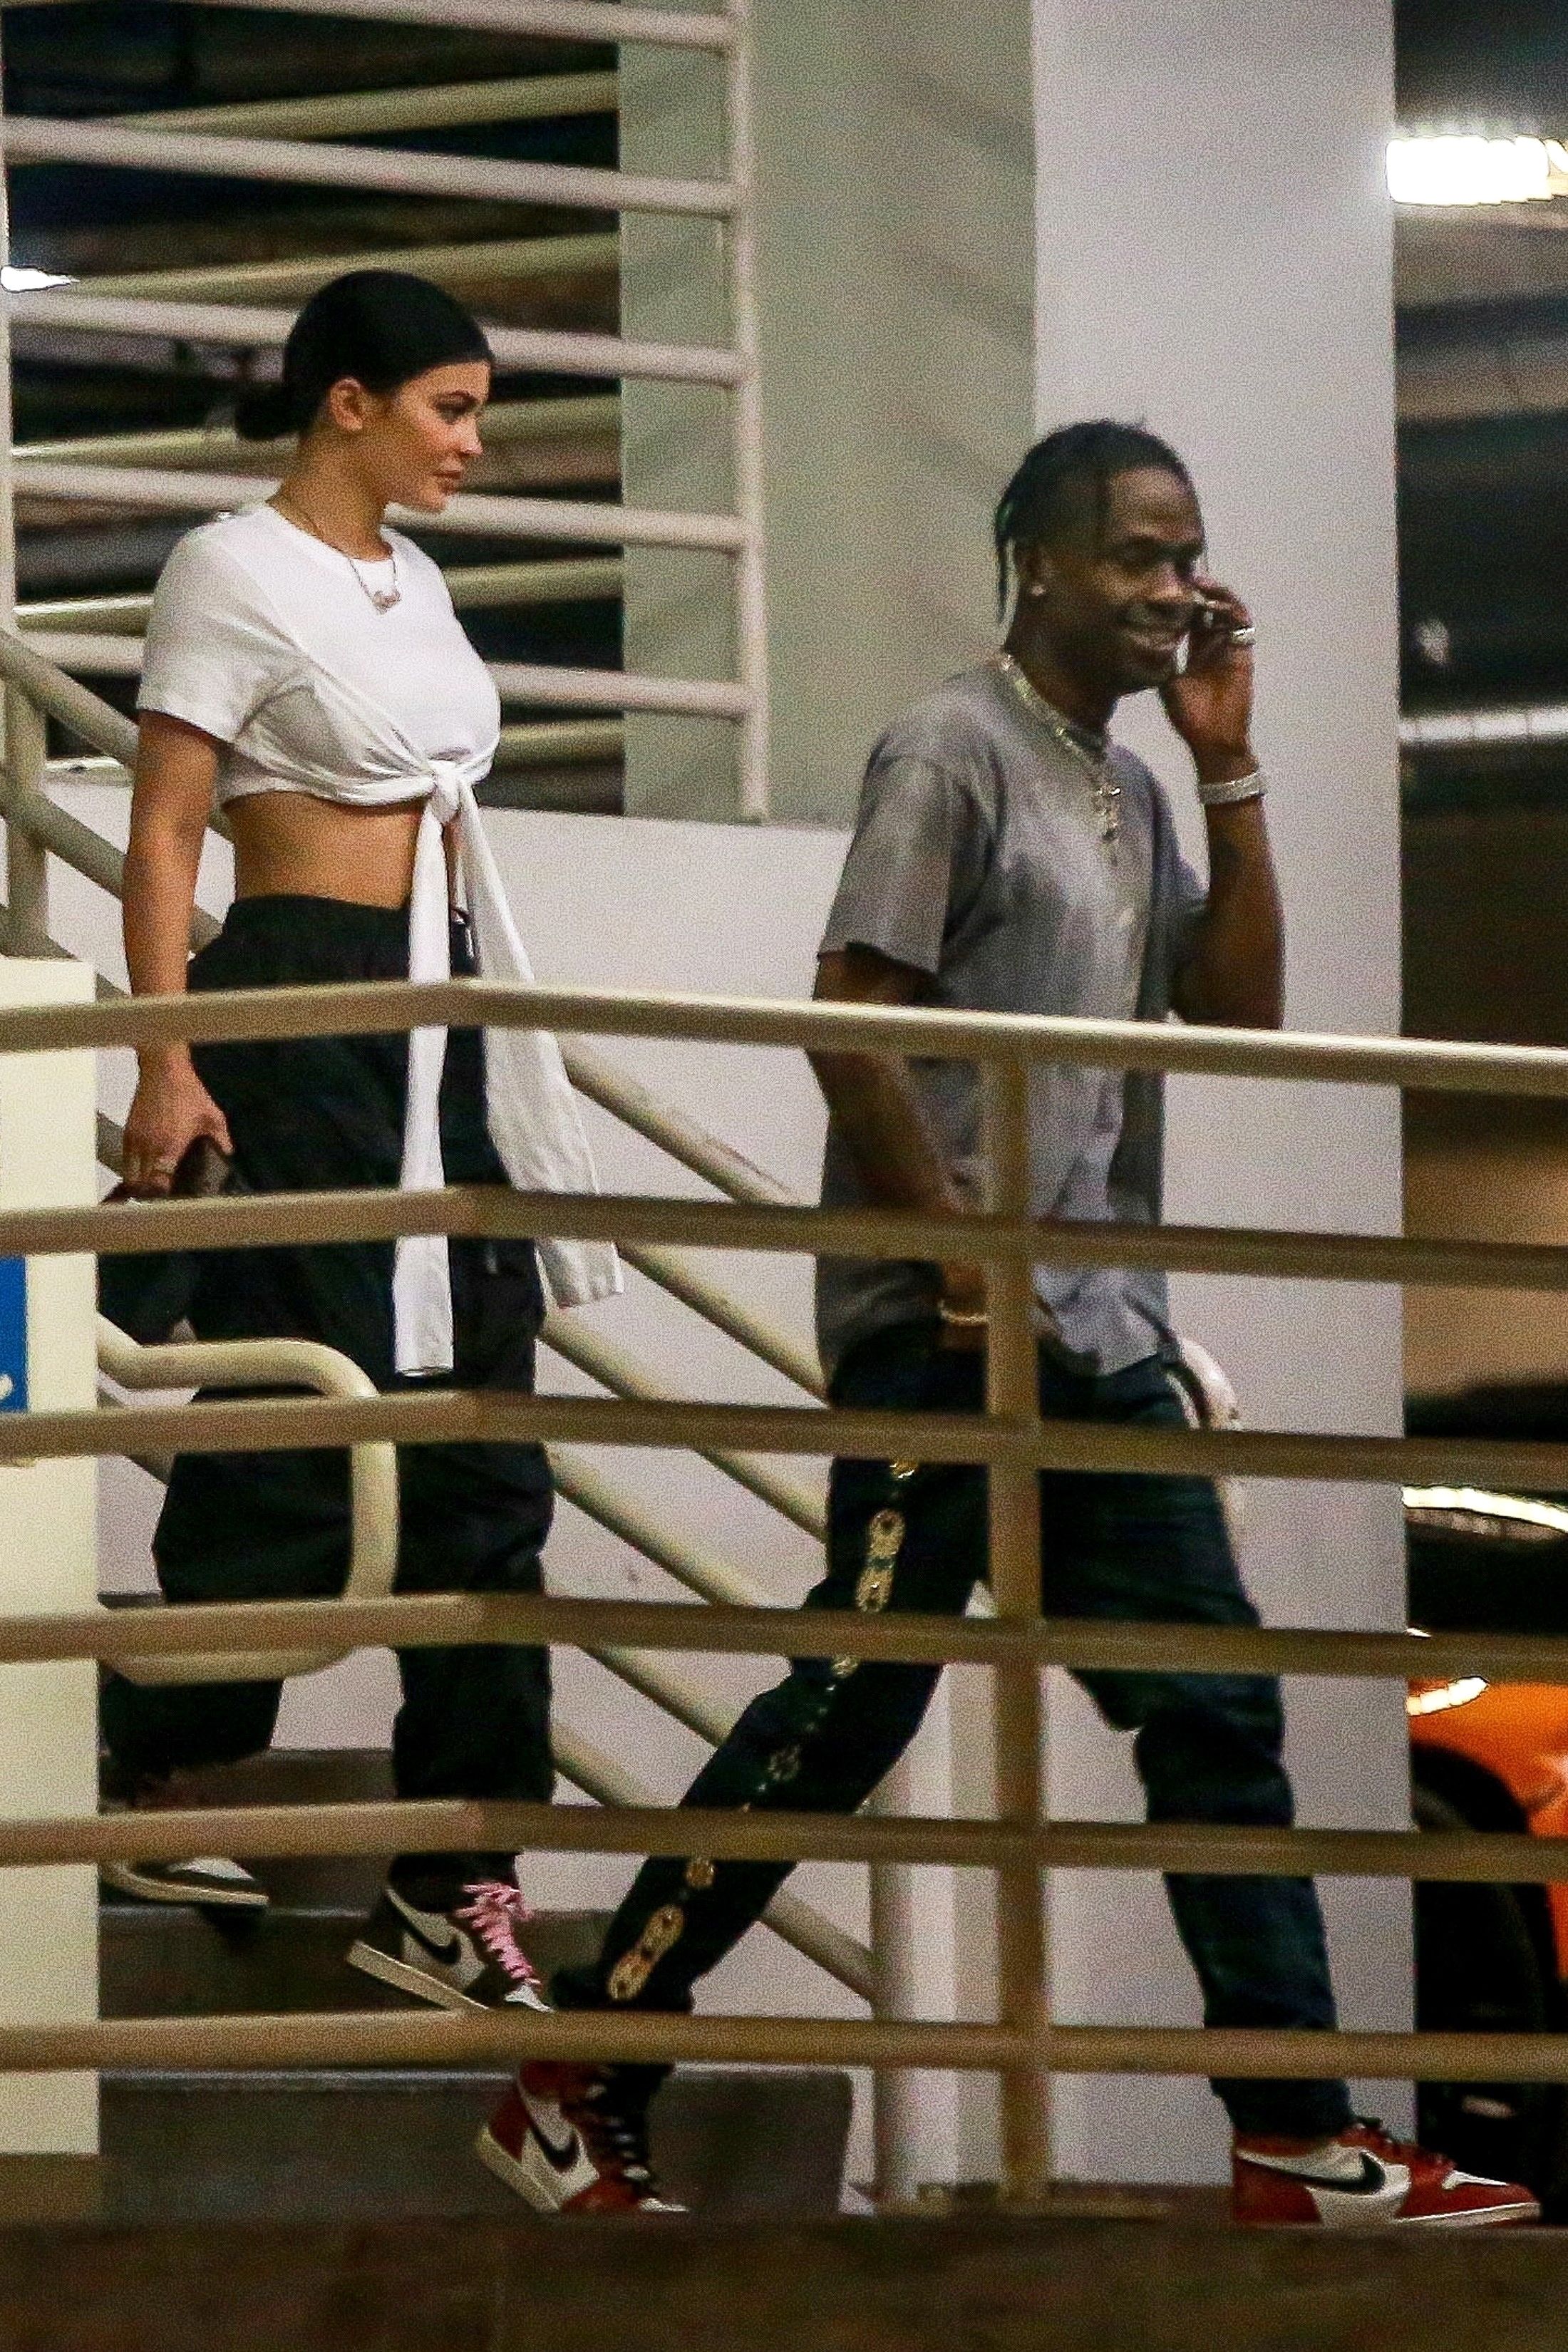 Kylie Jenner, Adidas Rep, Rival Brand Nike to Boyfriend Scott